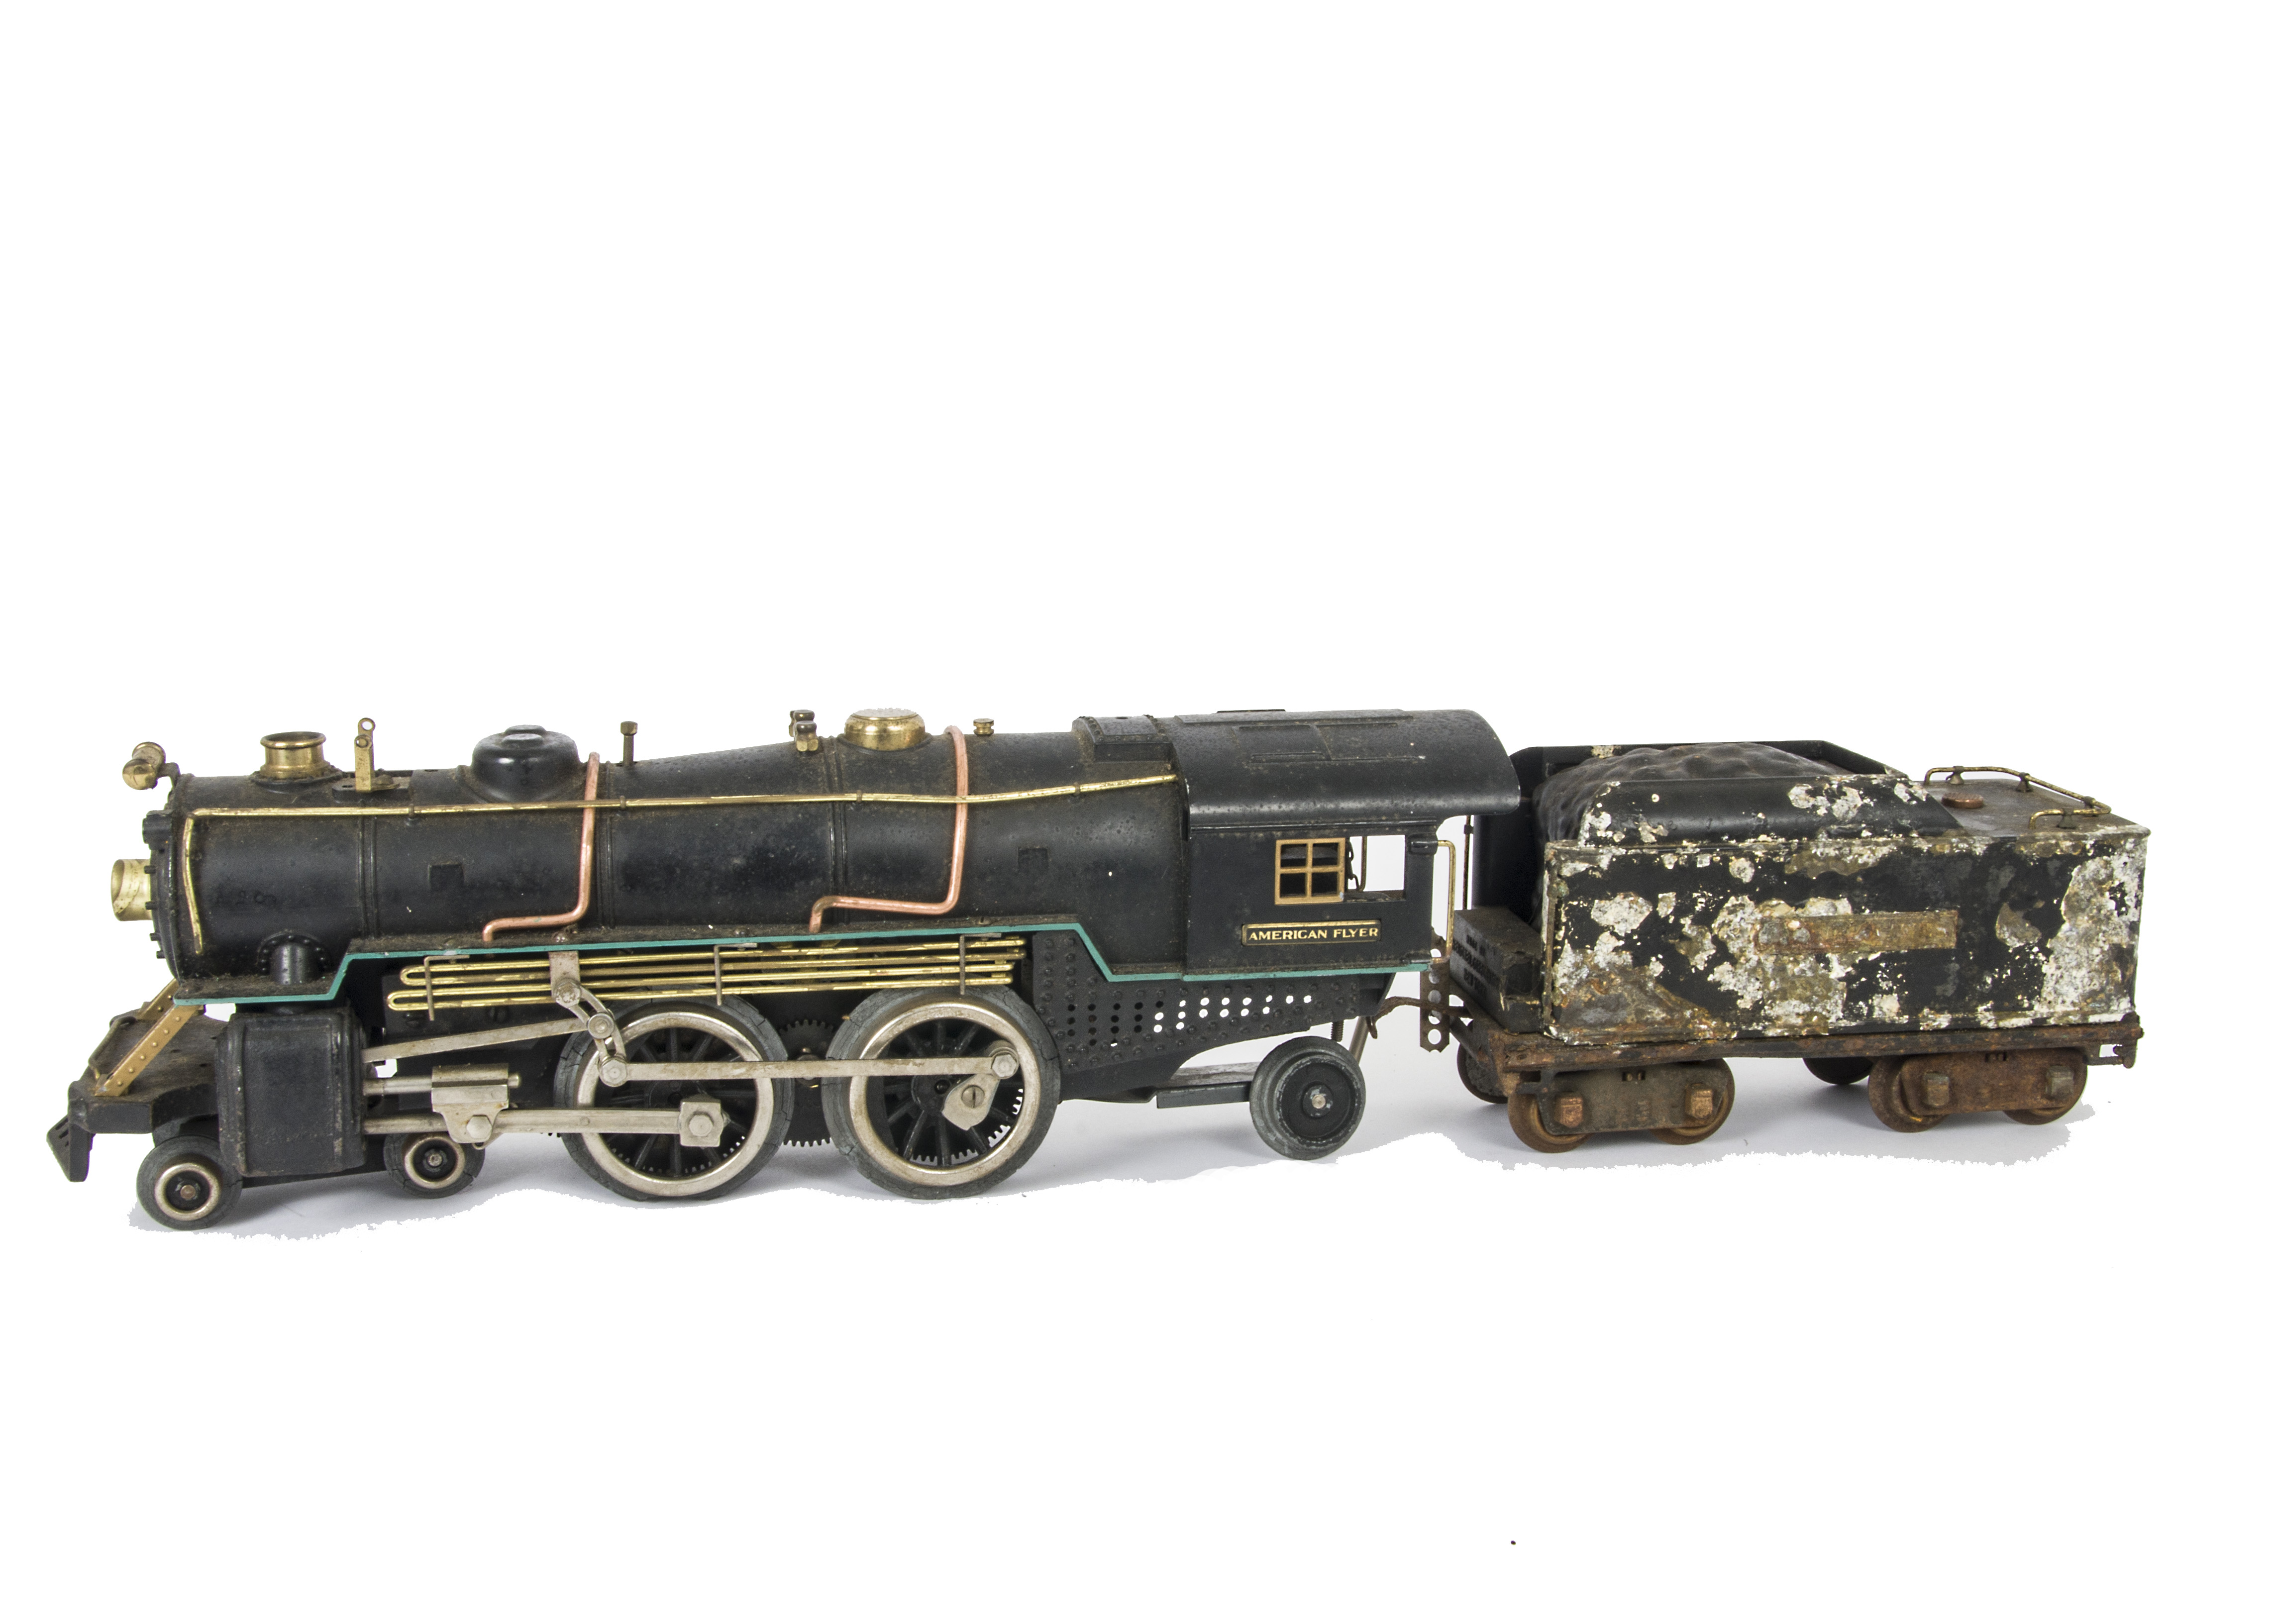 An American Flyer ‘Standard’ Gauge 4-4-2 Locomotive and Lionel Tender, the locomotive in black